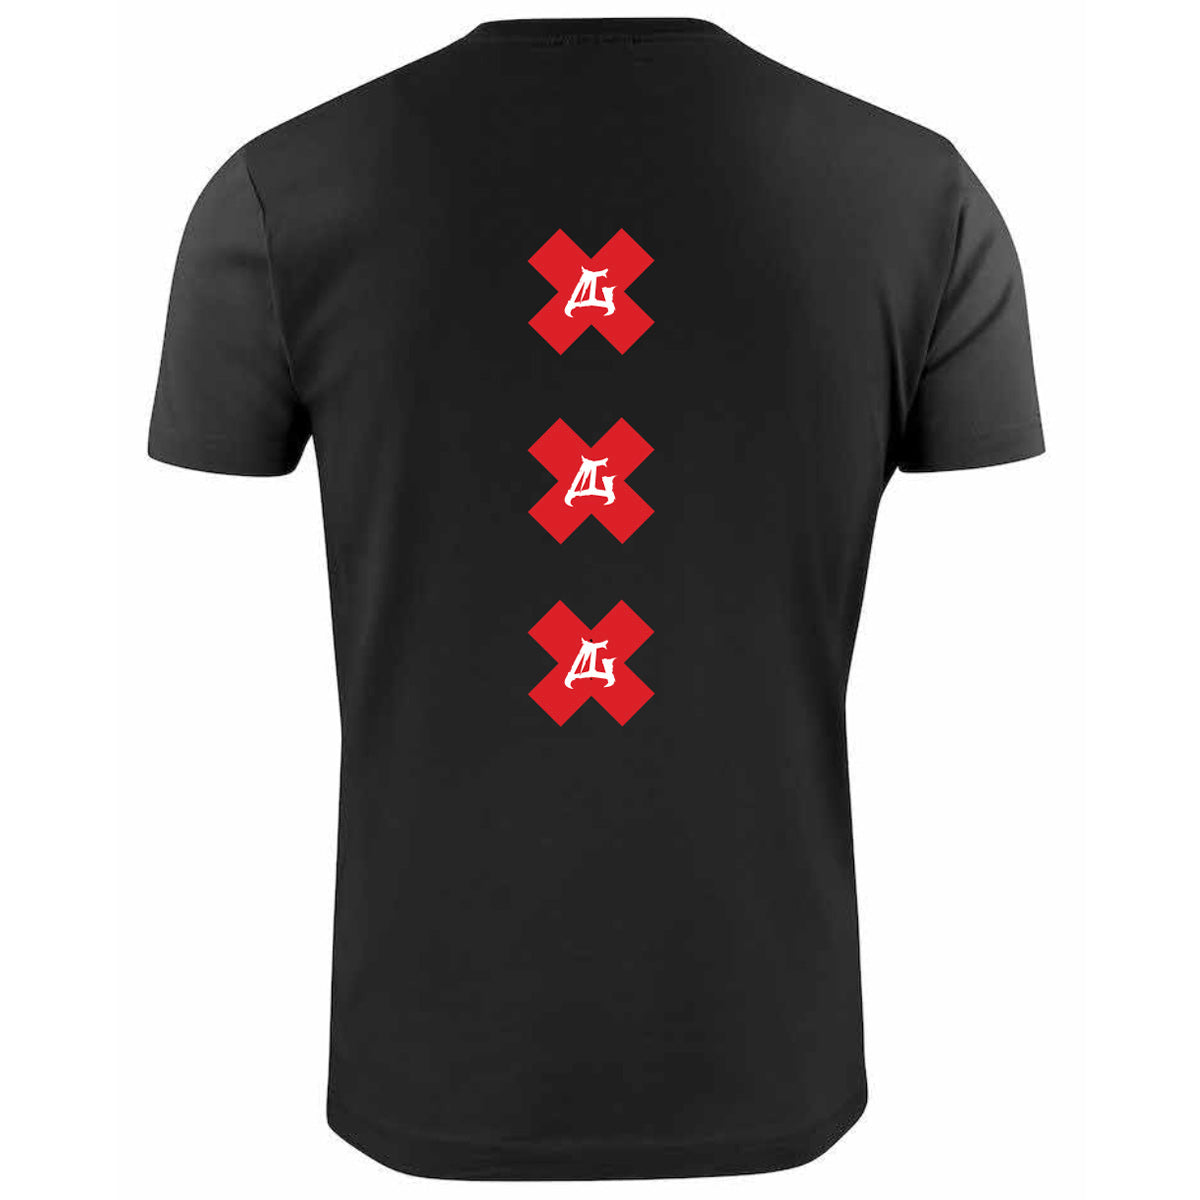 Multigroove T-shirt XXX zwart rood